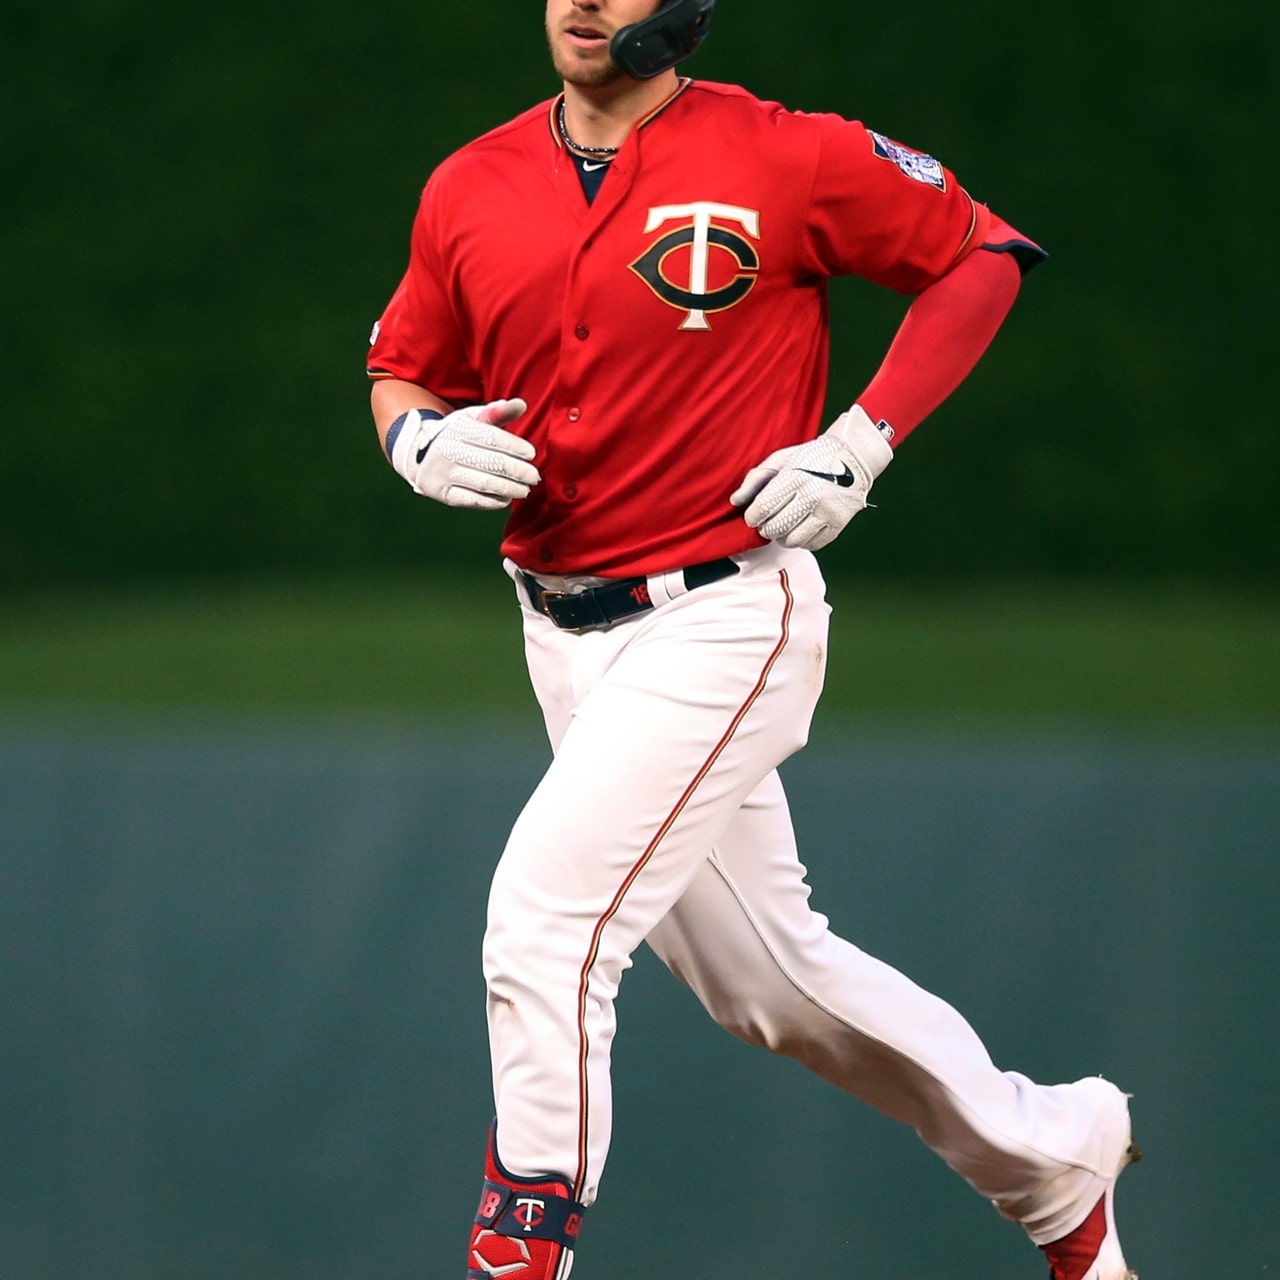 Yordan Alvarez: Houston Astros rookie breaks Albert Pujols' RBI record